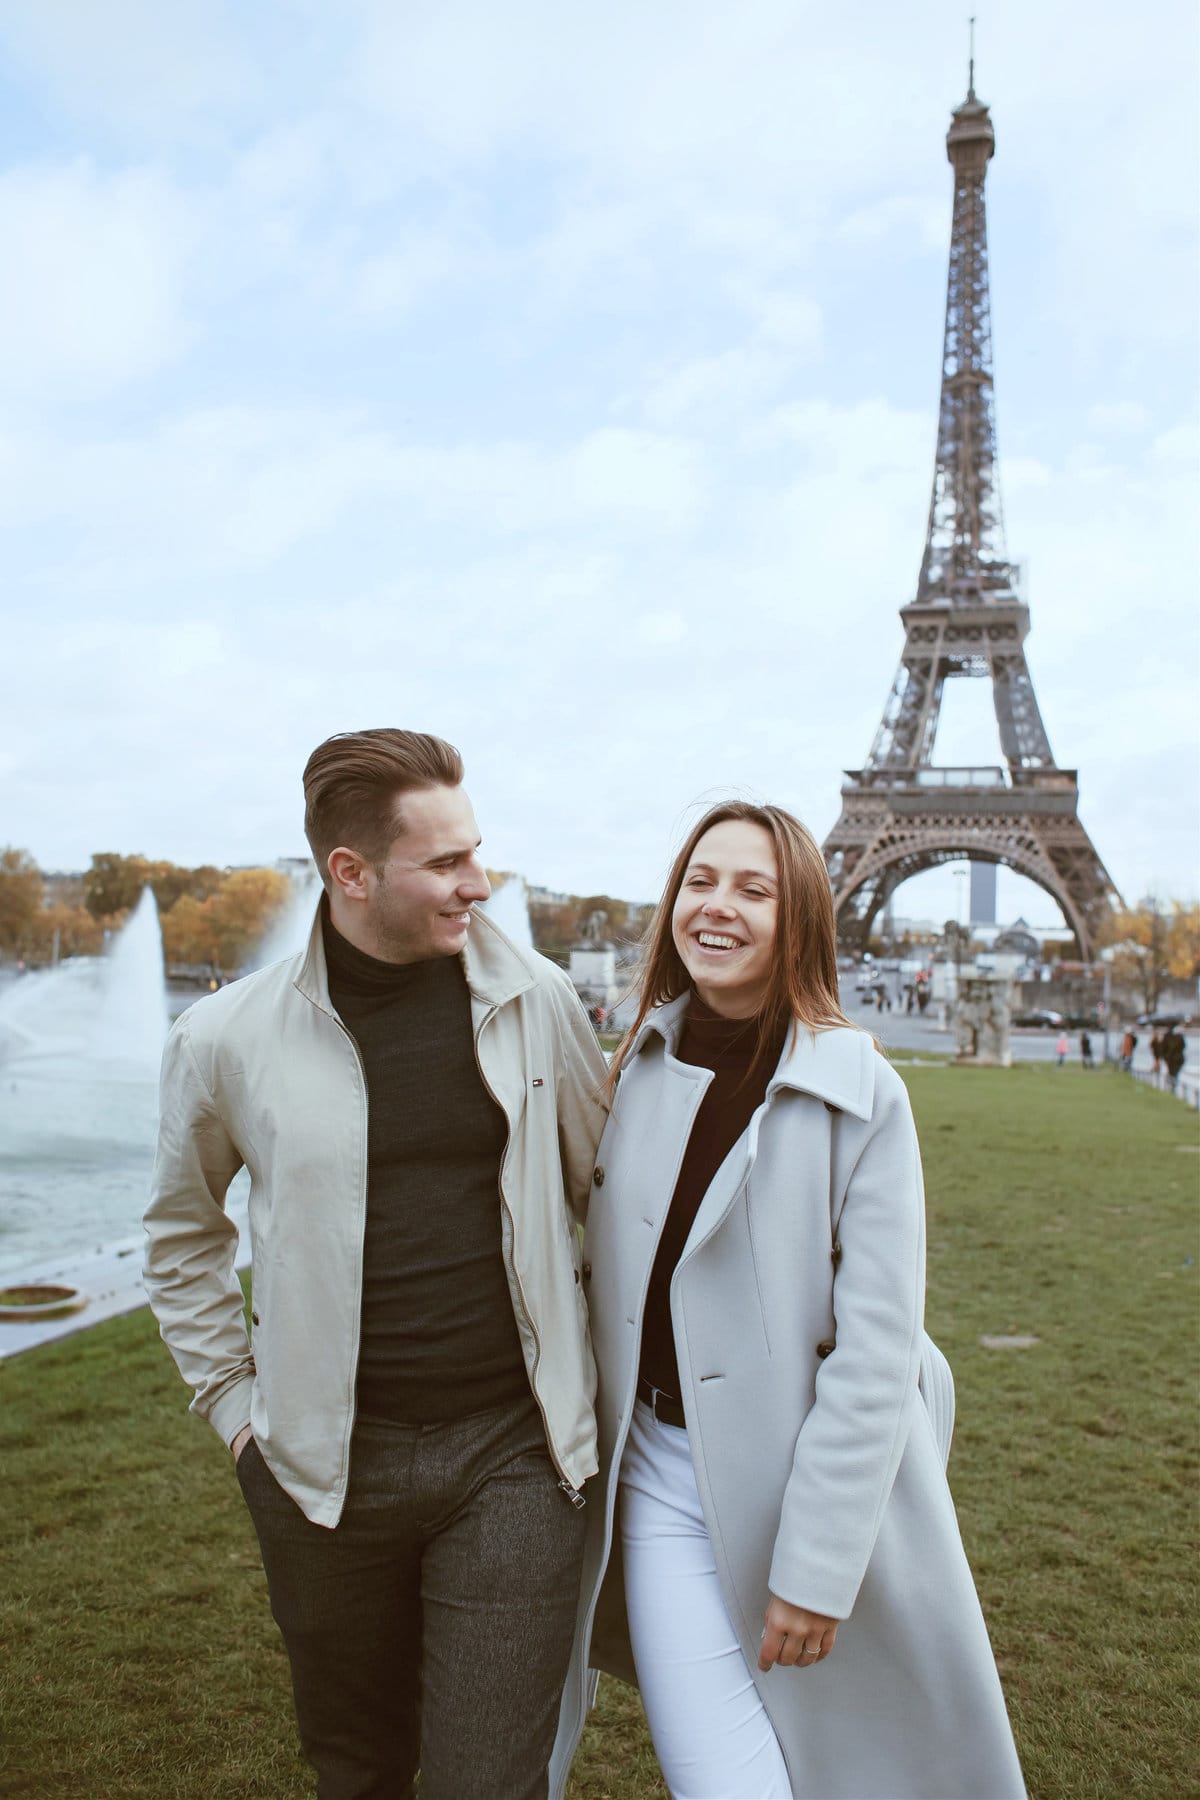 Romance is a top reason to visit Paris